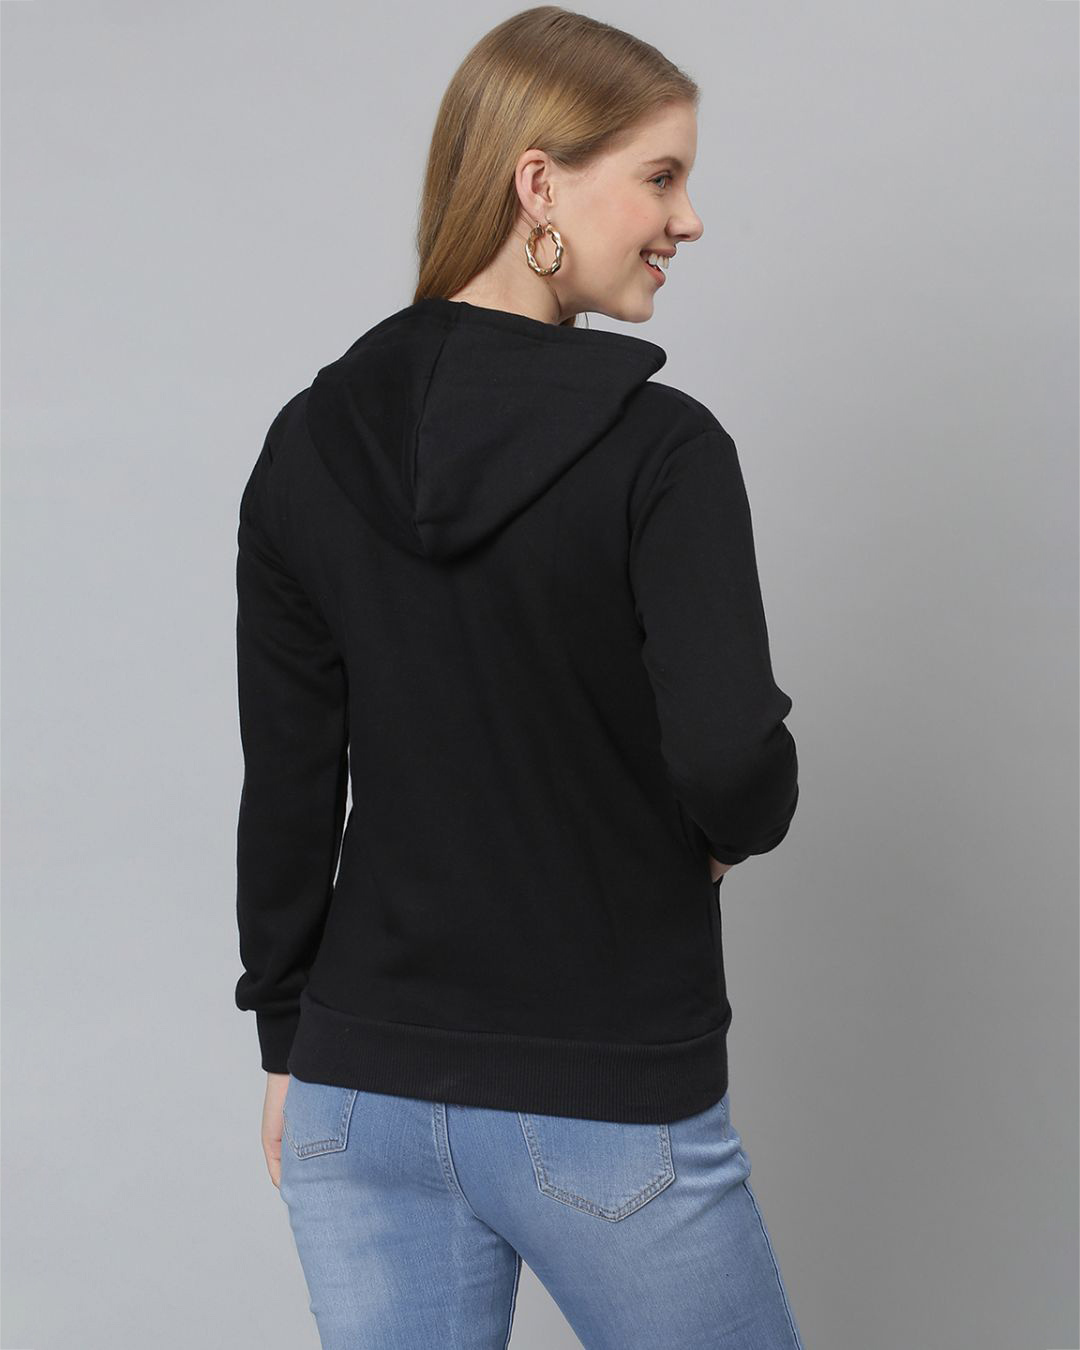 Shop Women's Black Printed Stylish Casual Hooded Sweatshirt-Back